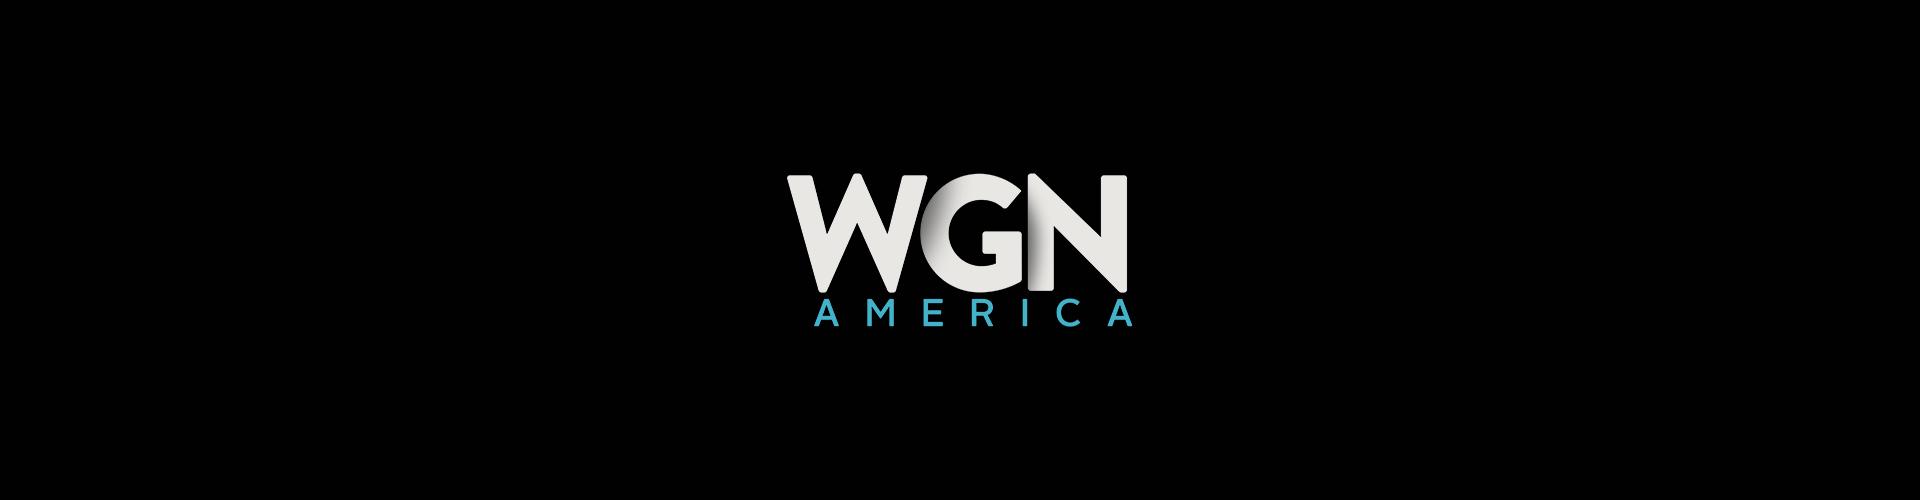 WGN America Logo - Tribune Media | WGN America